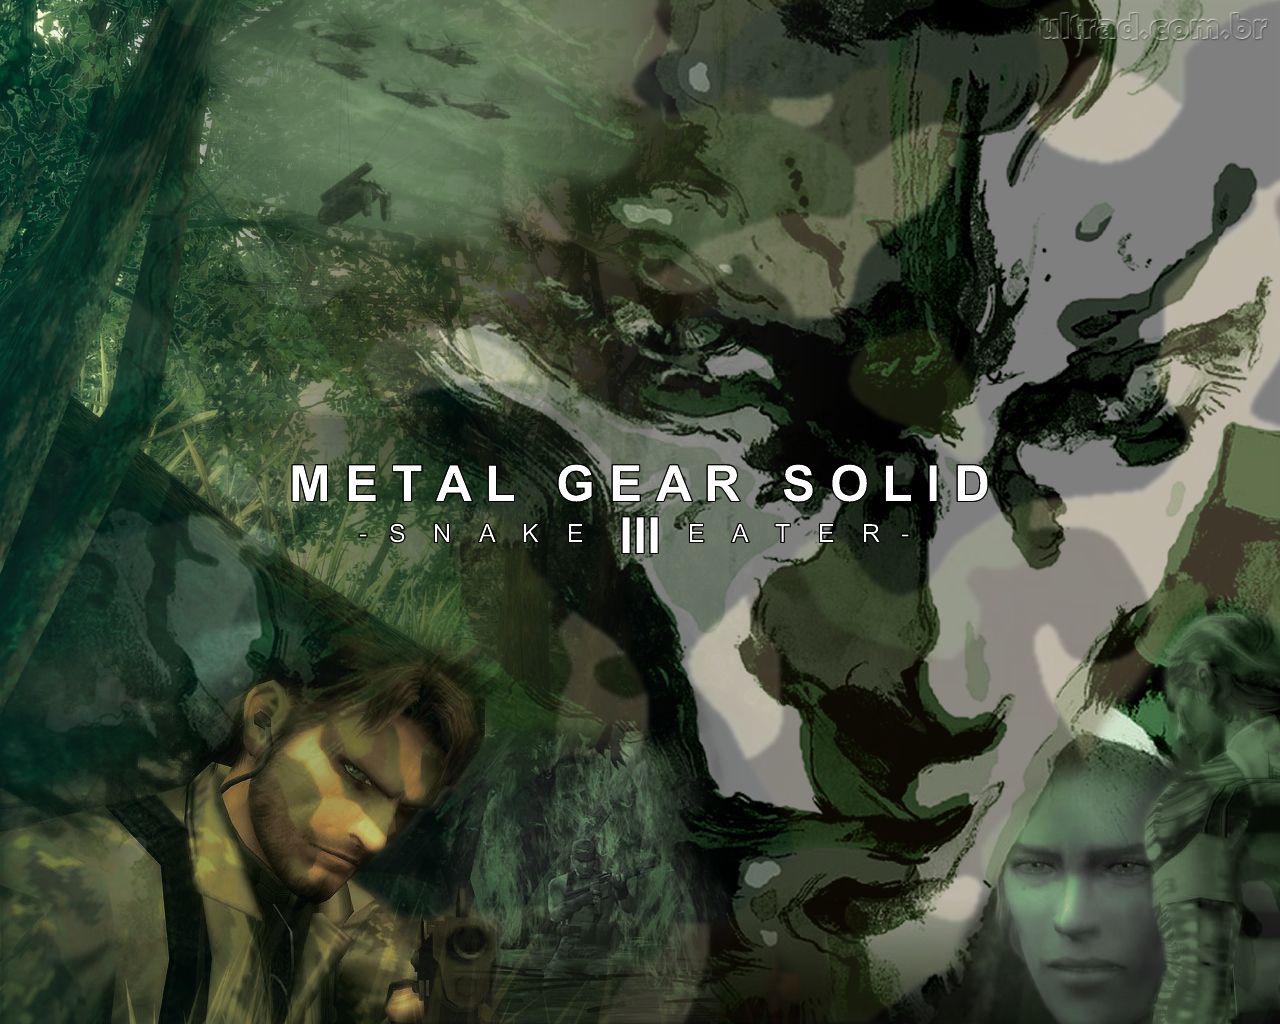 Papel de Parede Metal Gear Solid 3: Snake Eater